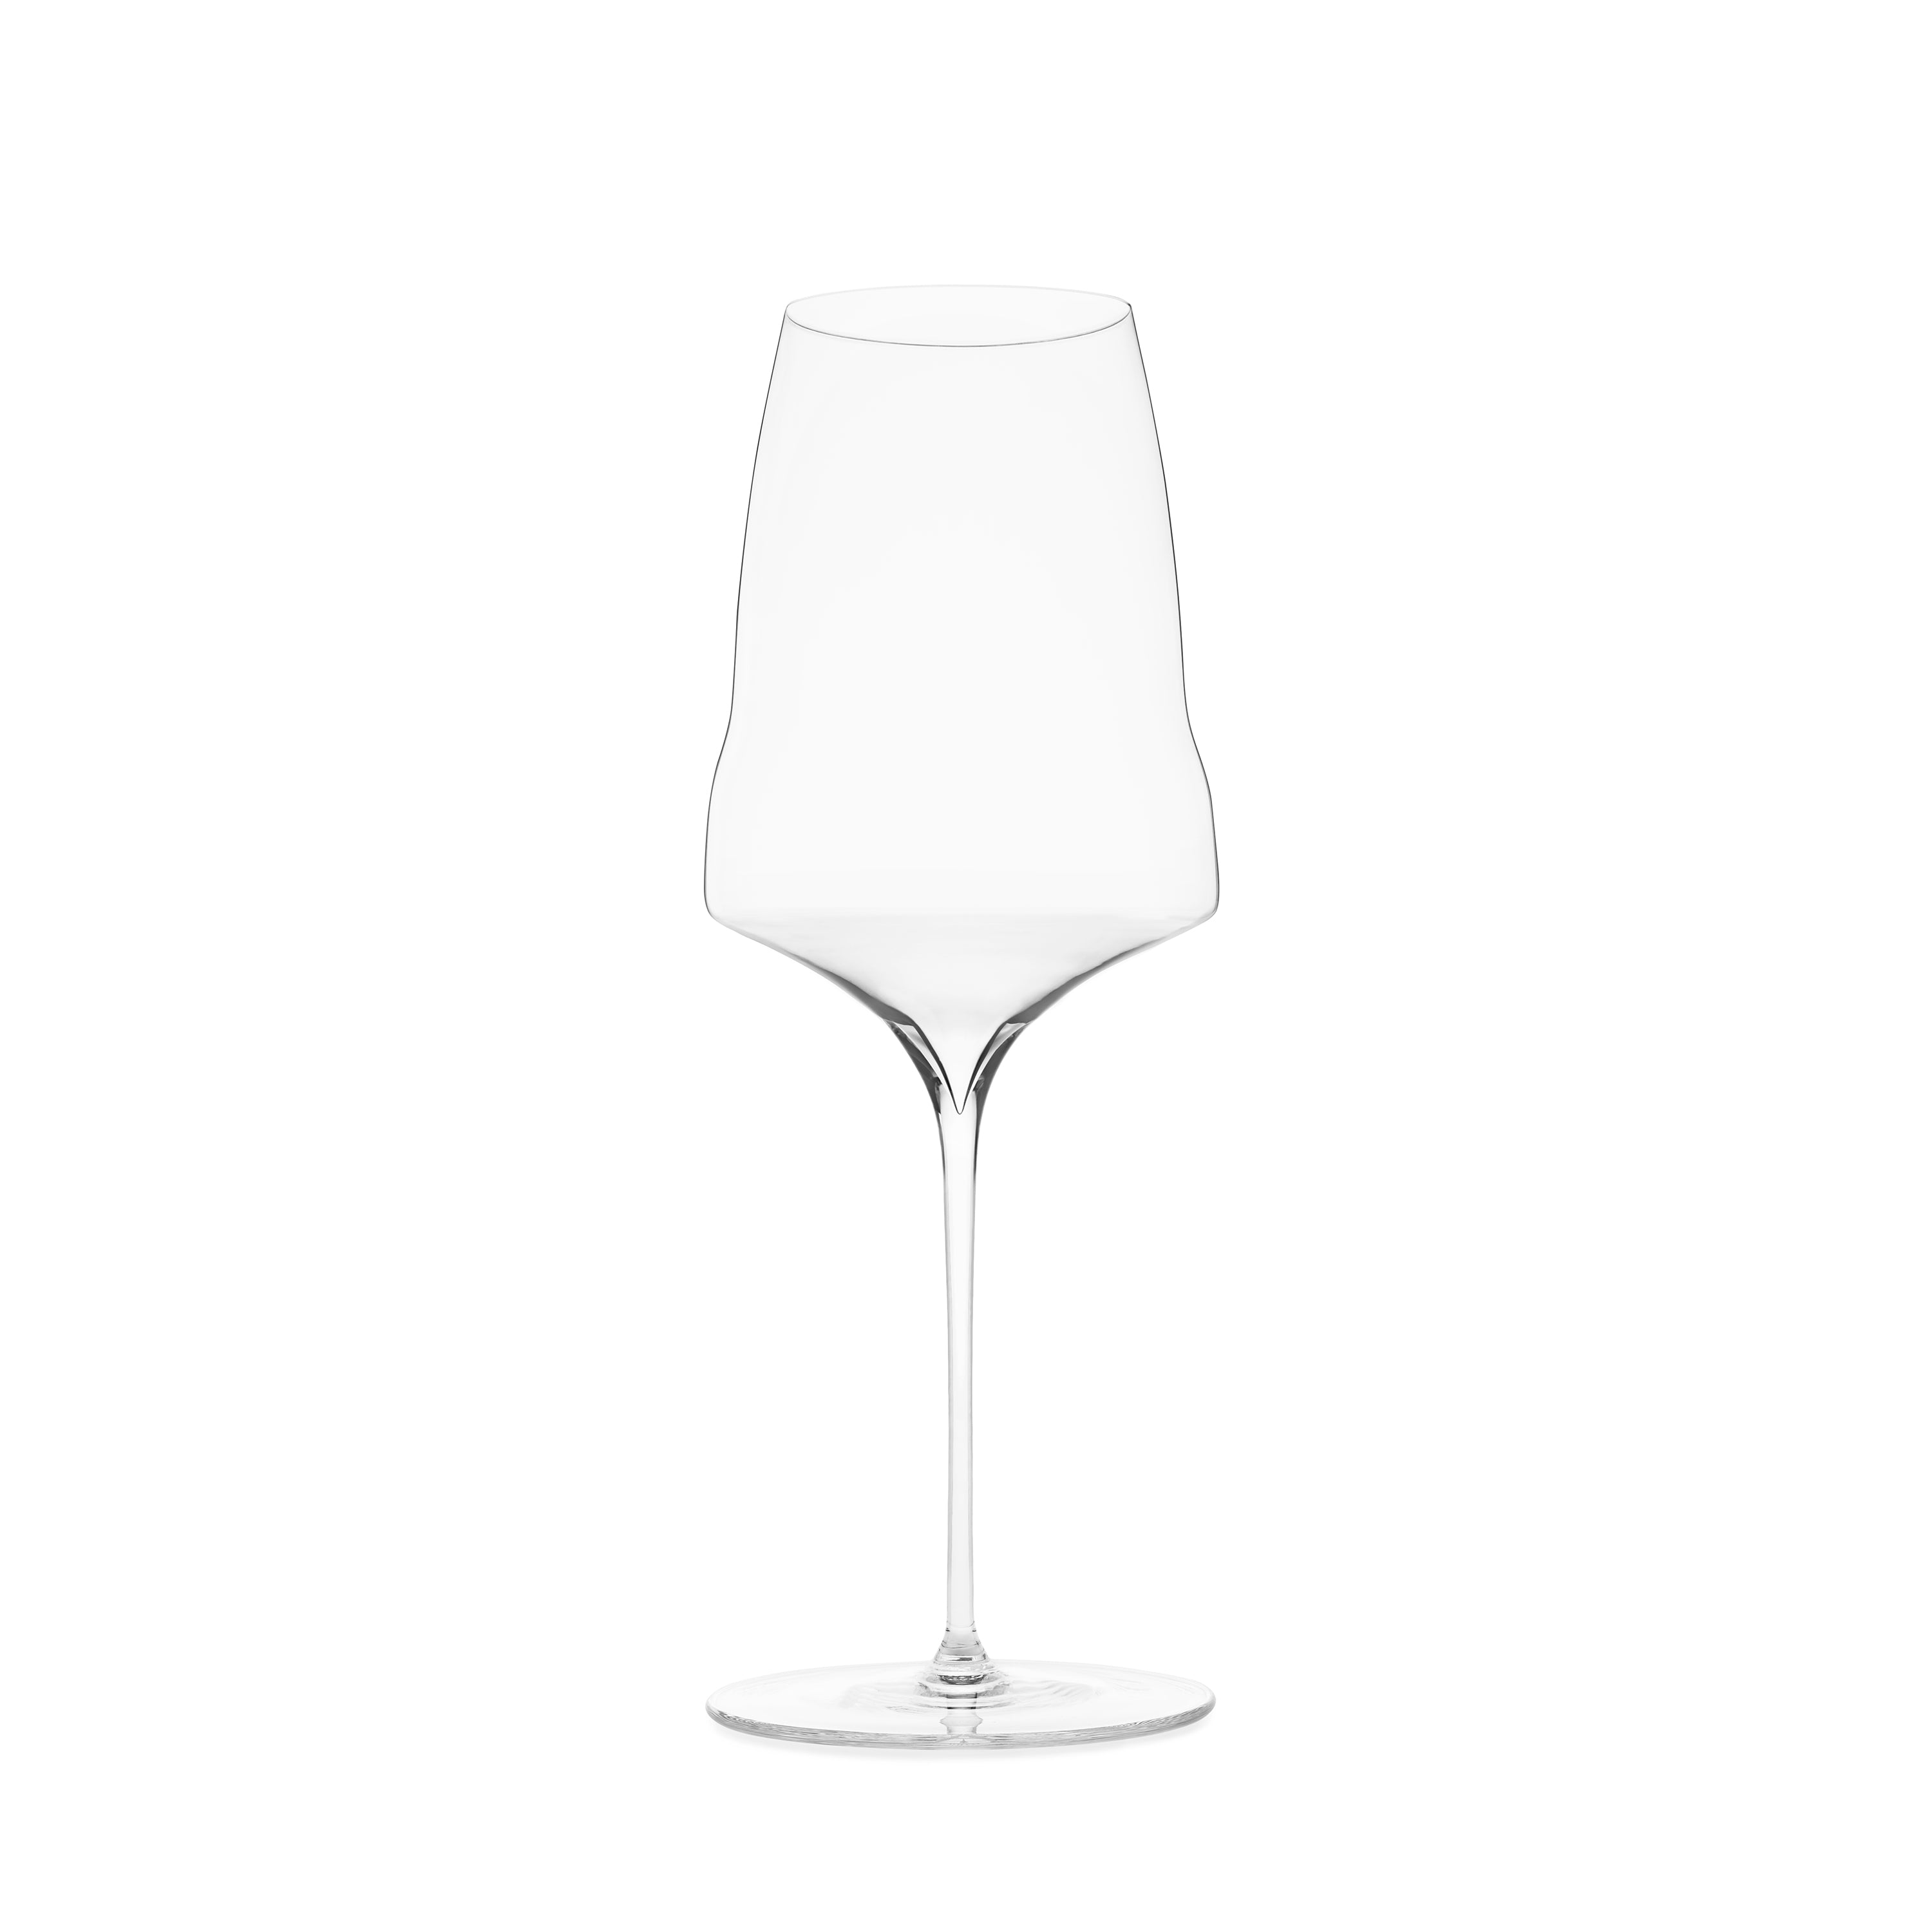 Single universal glass by Josephinenhütte